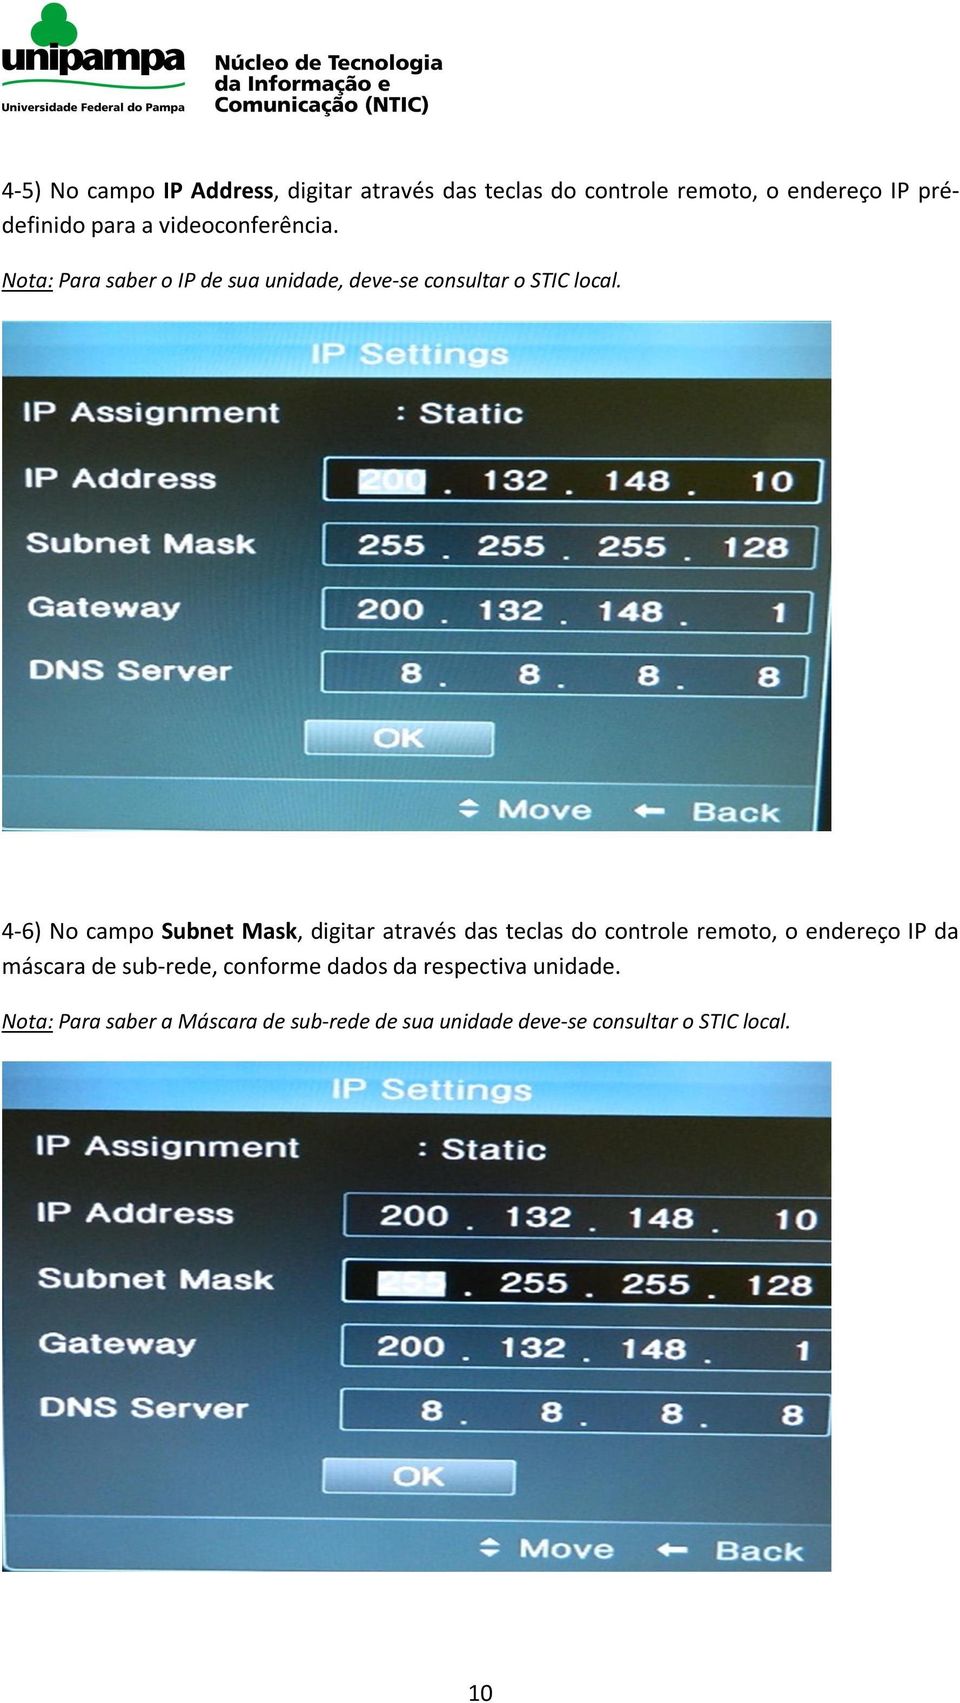 4-6) No campo Subnet Mask, digitar através das teclas do controle remoto, o endereço IP da máscara de